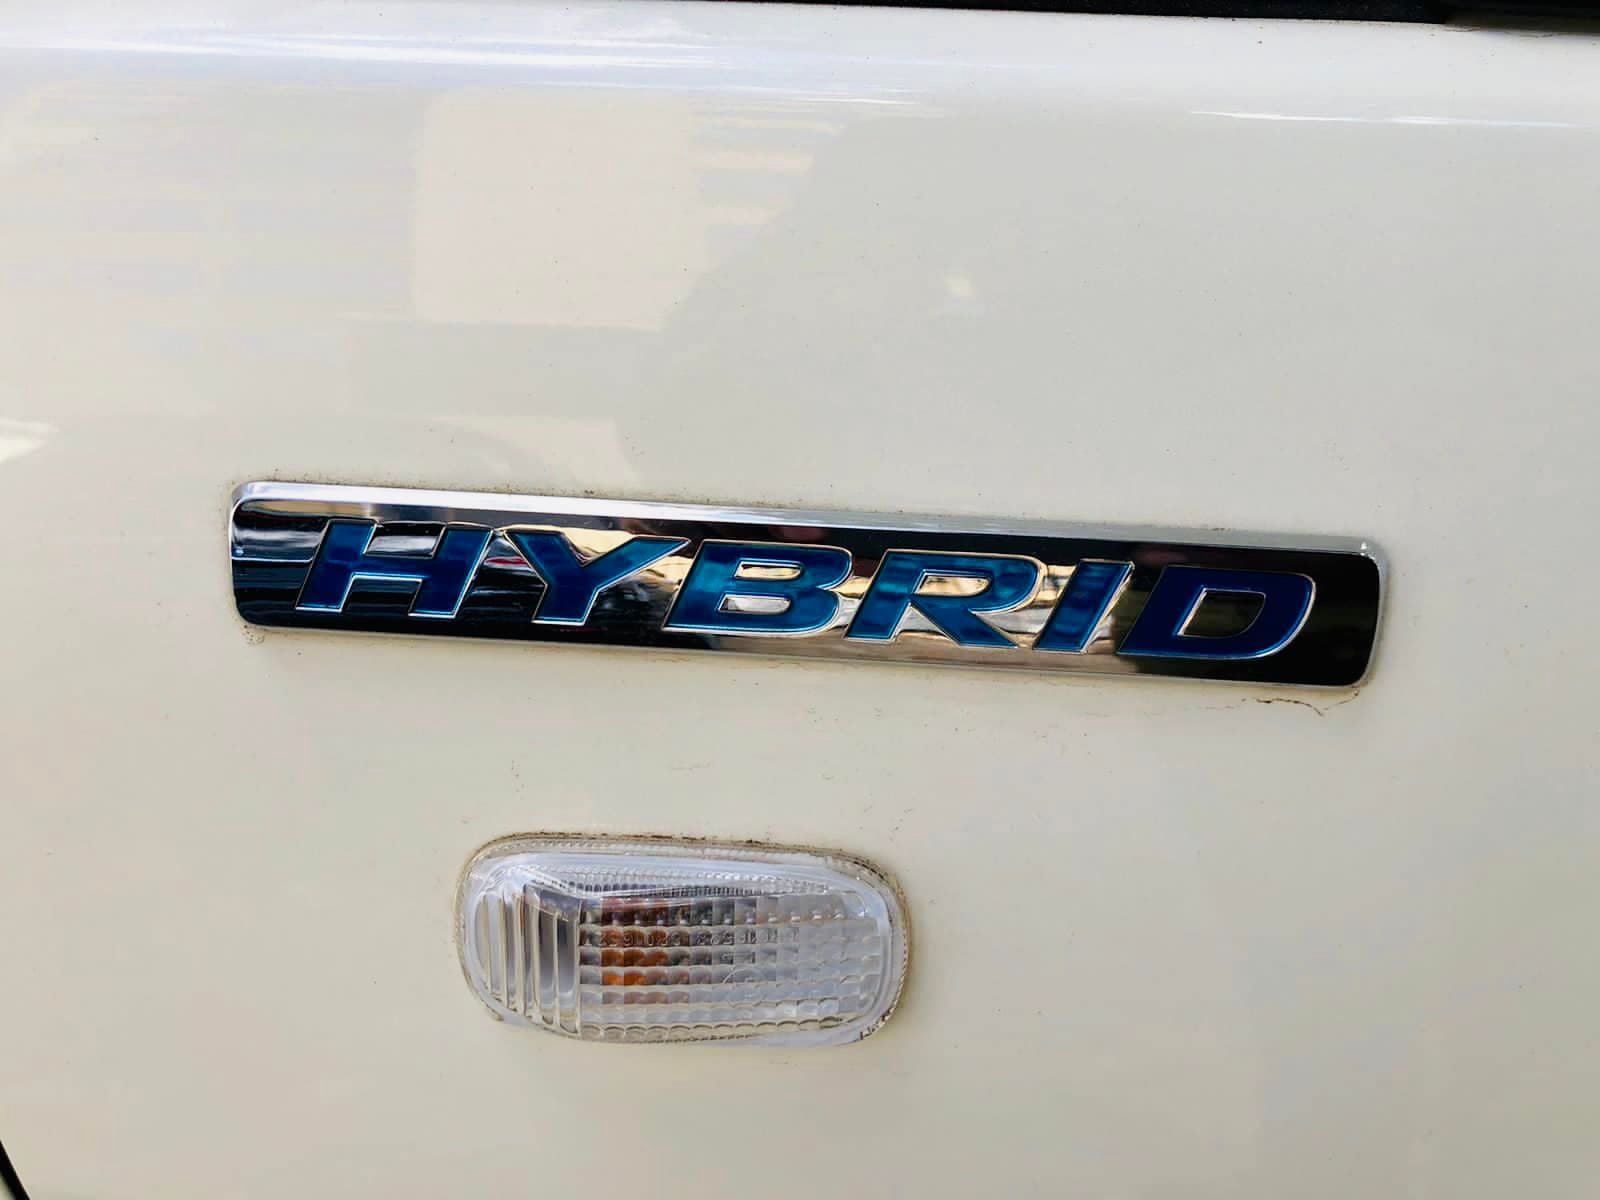 Hybrid or non-hybrid Cars